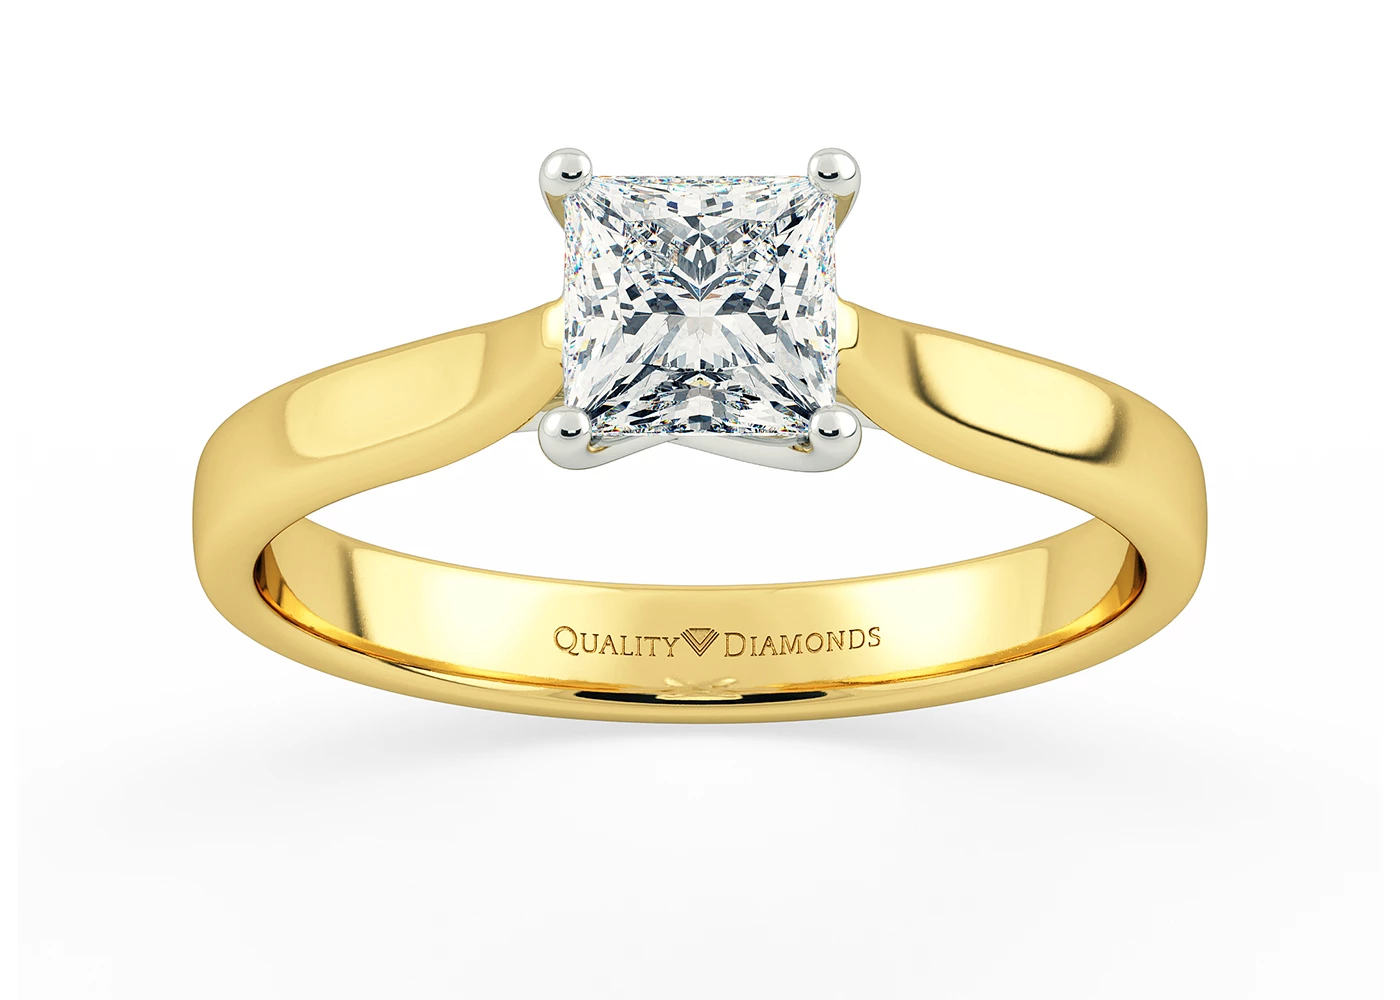 Princess Mirabelle Diamond Ring in 9K Yellow Gold